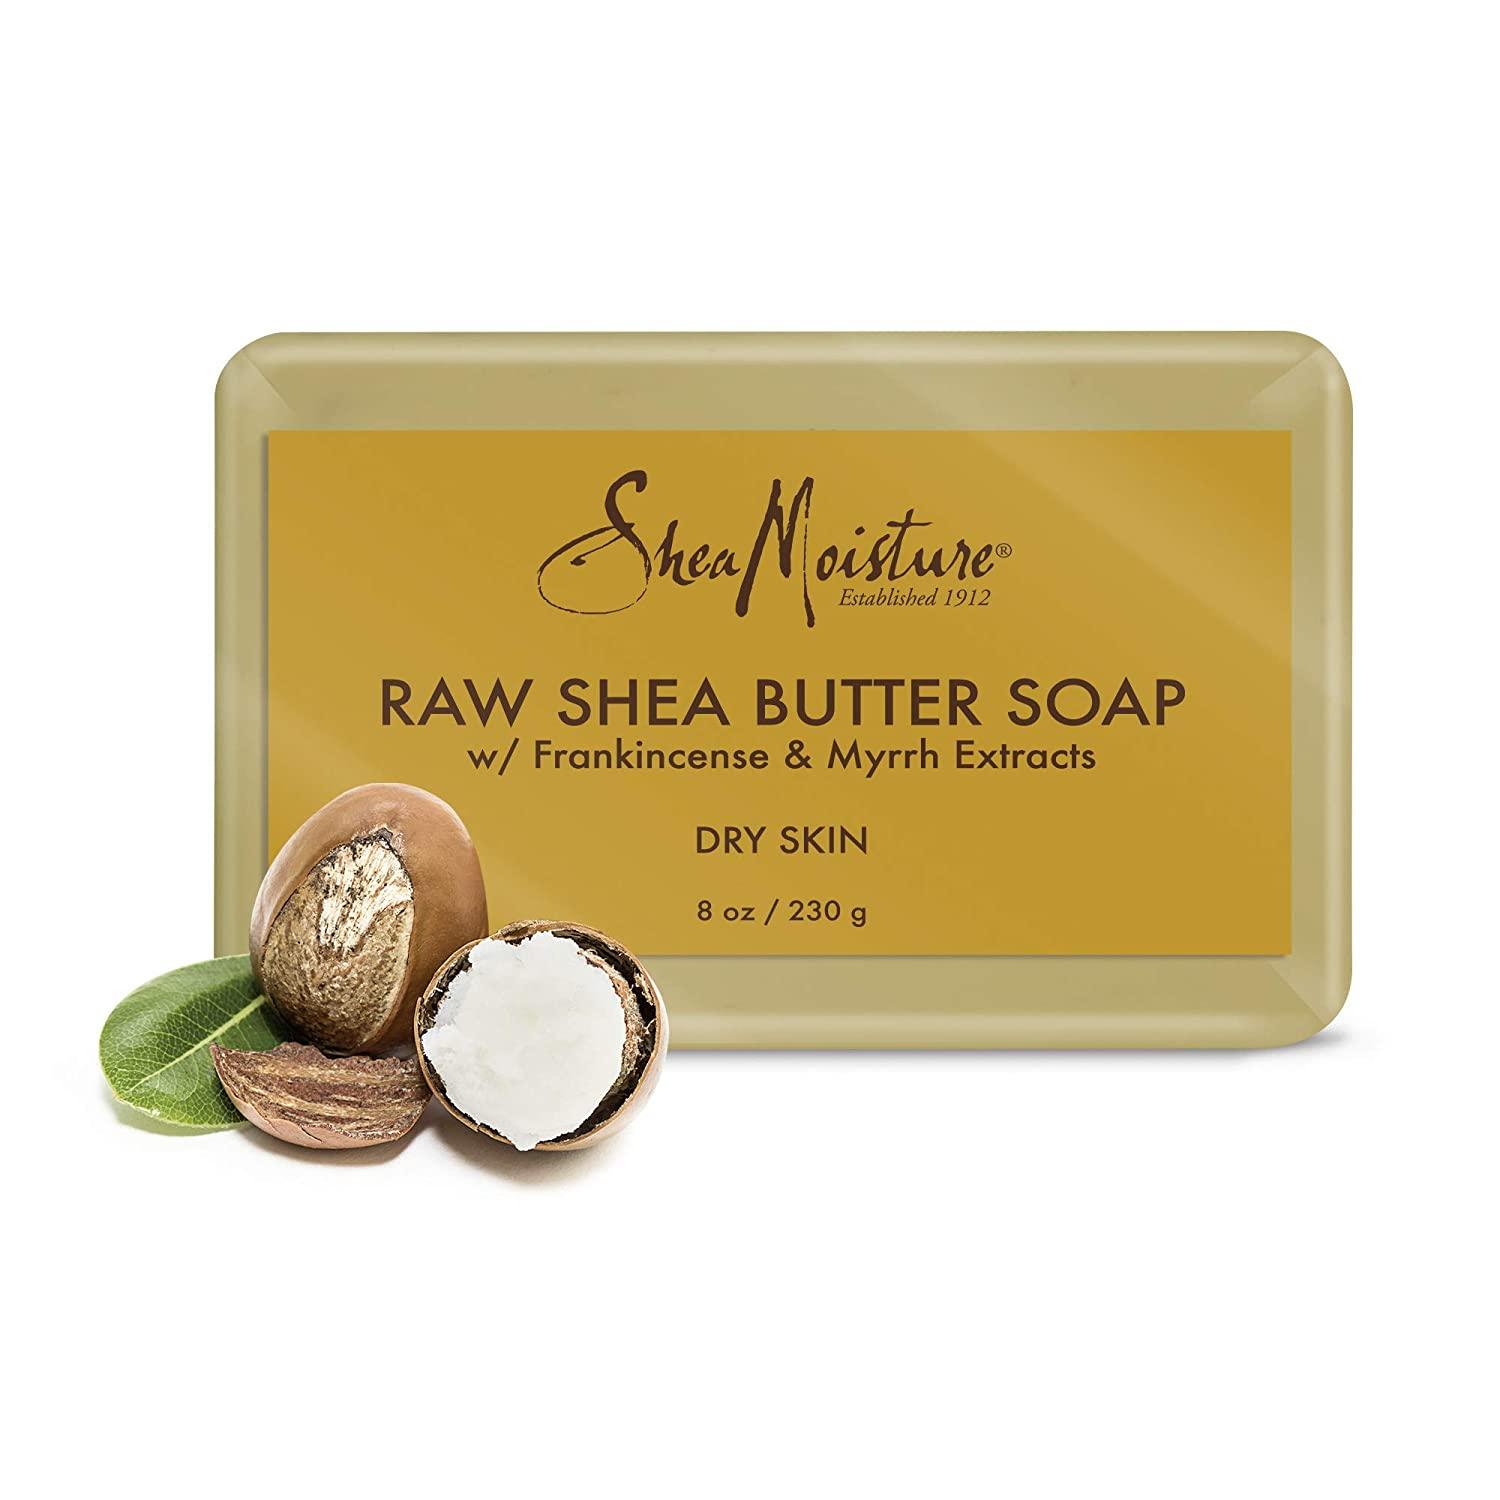 Rosemary Mint & Eucalyptus Shea Butter Soap – Nailah's Shea